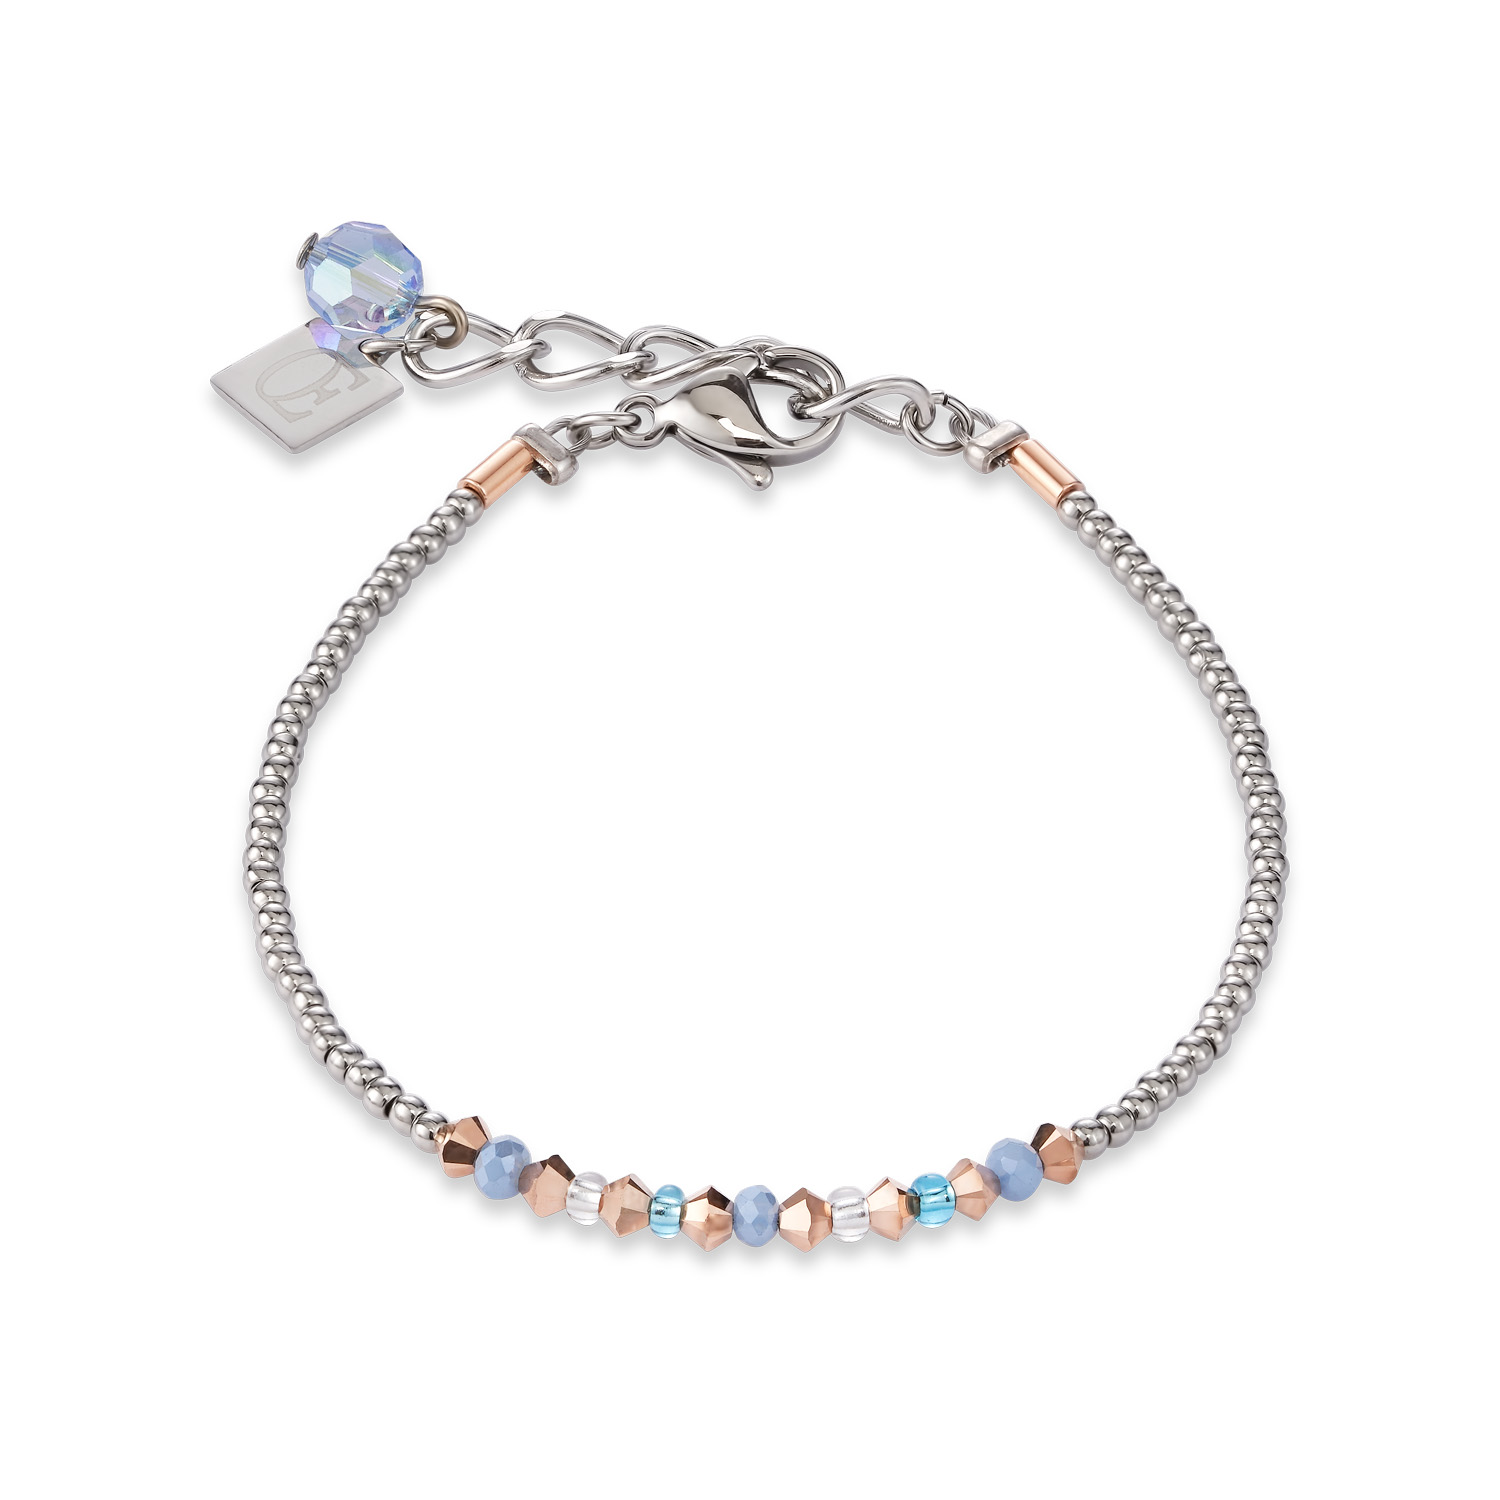 Wholesale British OEM/ODM Jewelry Custom made cubic zirconia silver bracelet fashion jewelry wholesaler